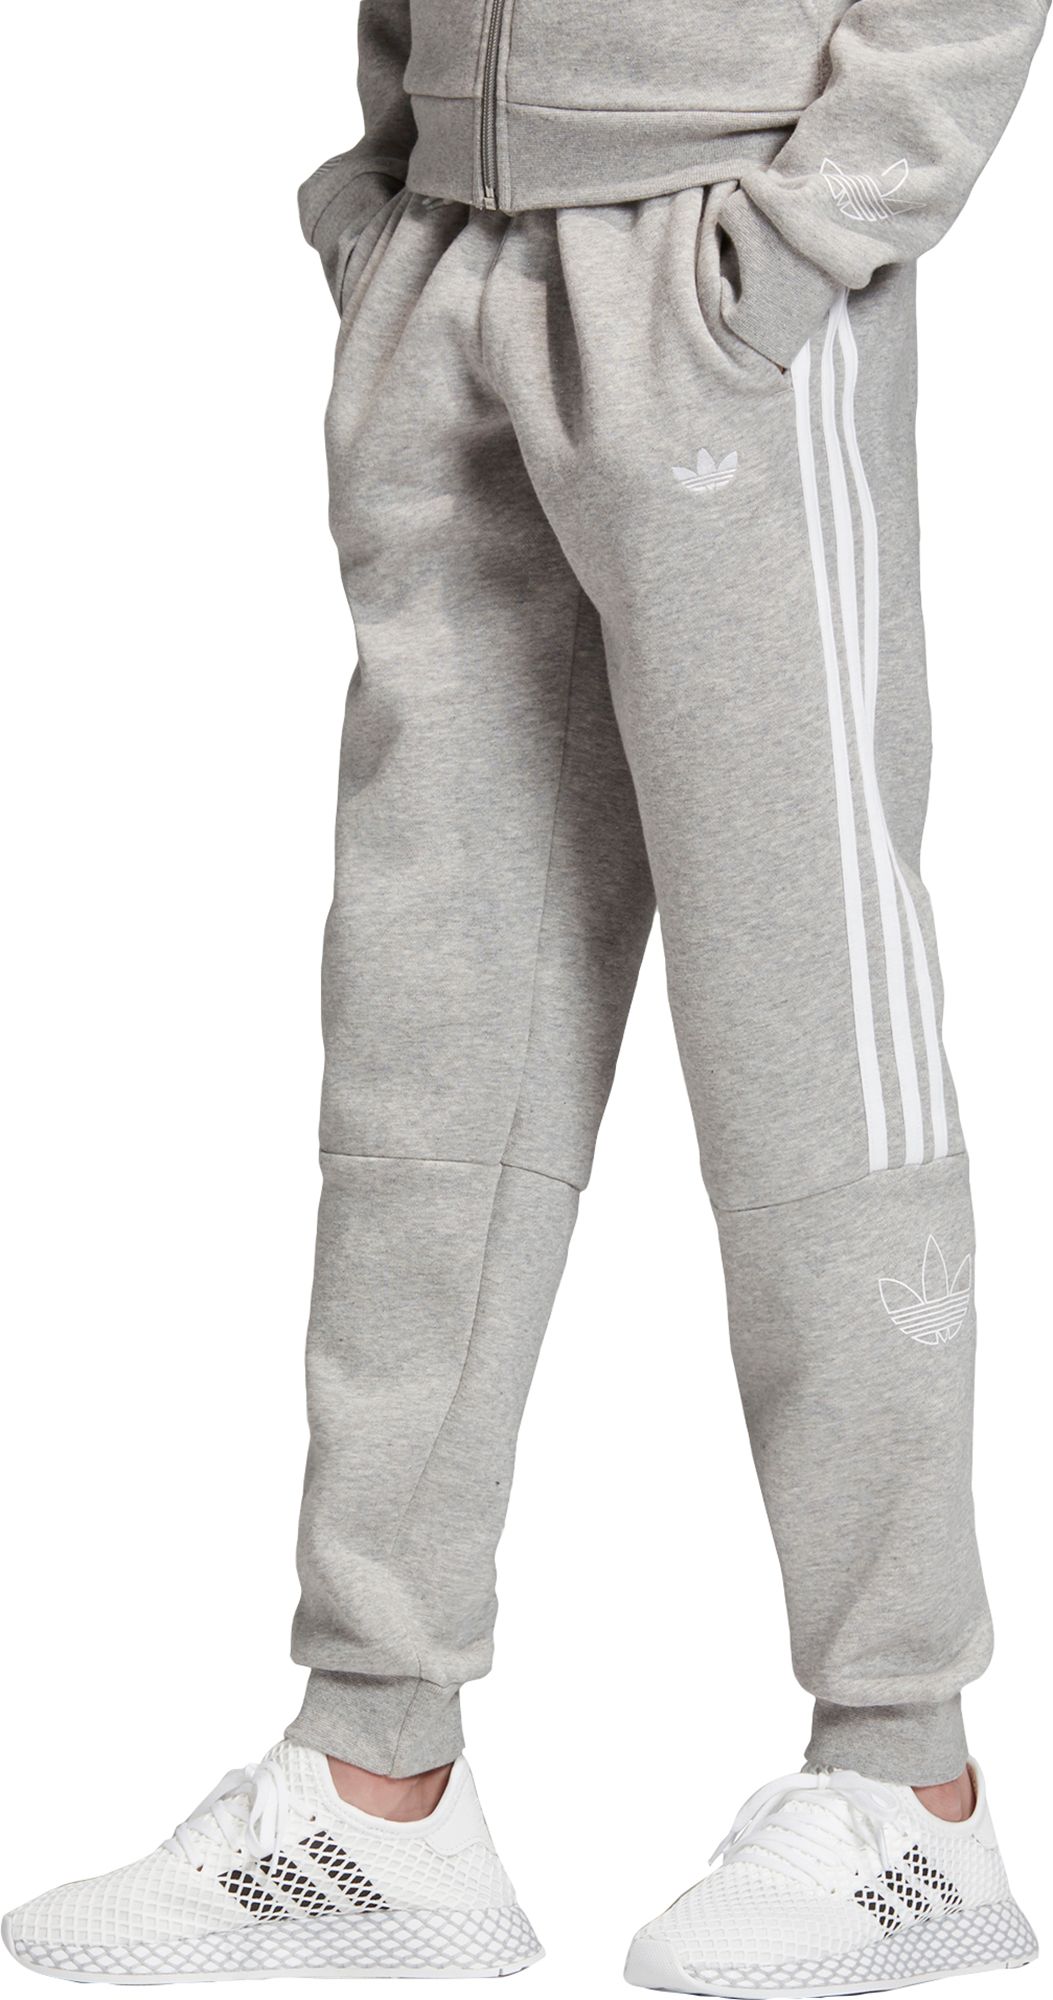 adidas jogging pants grey